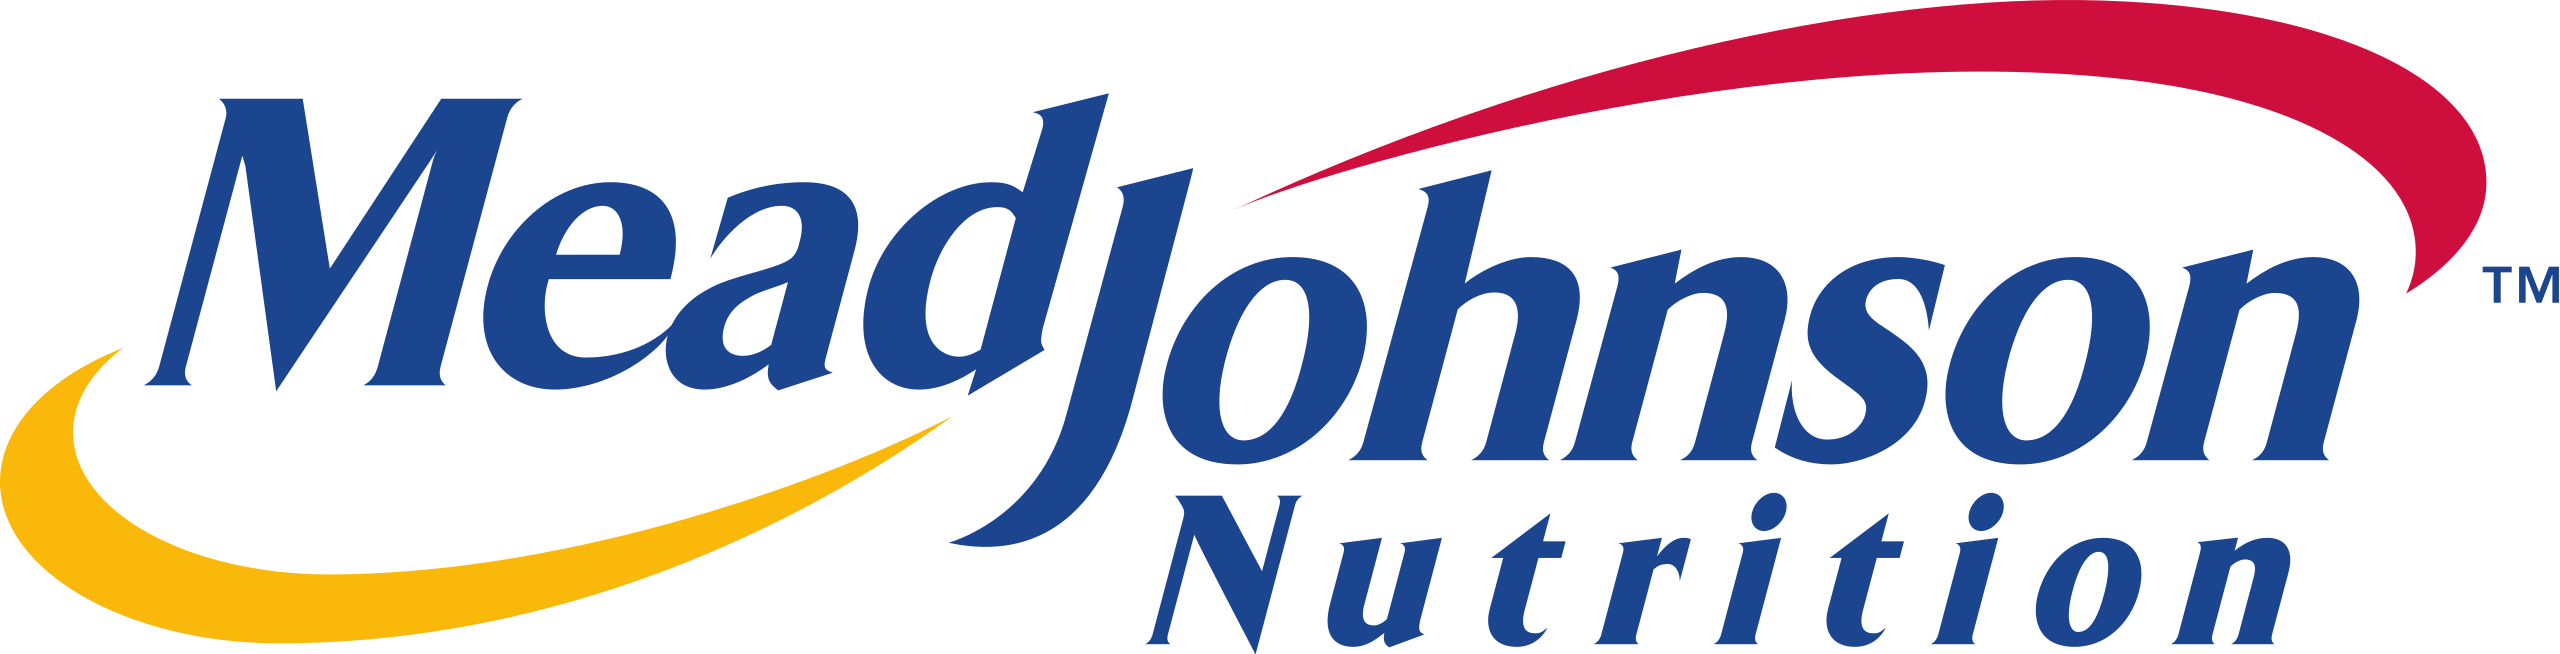 Mead Johnson logo.svg